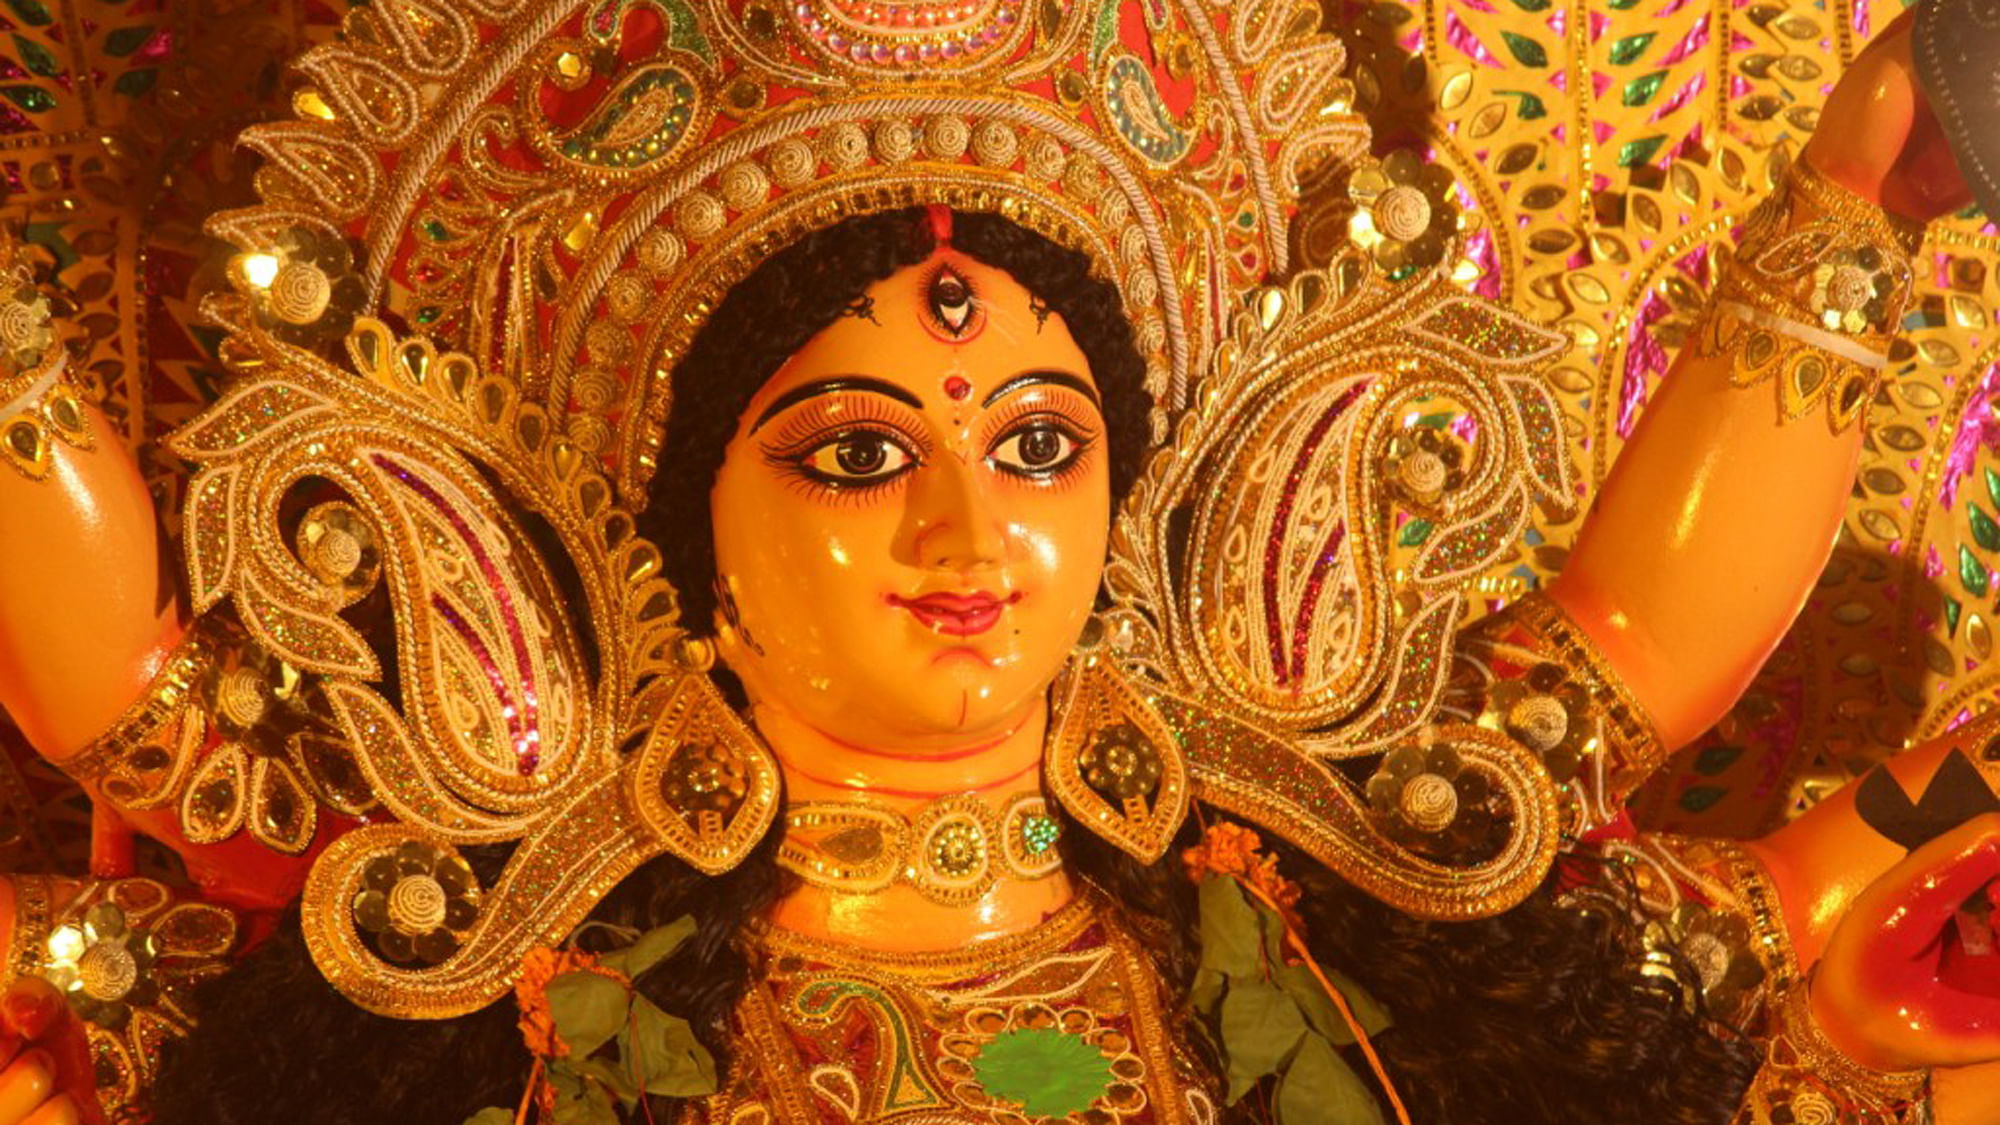 Celebrated festival of India, Durga Puja. (Photo Courtesy: Devanik Saha)